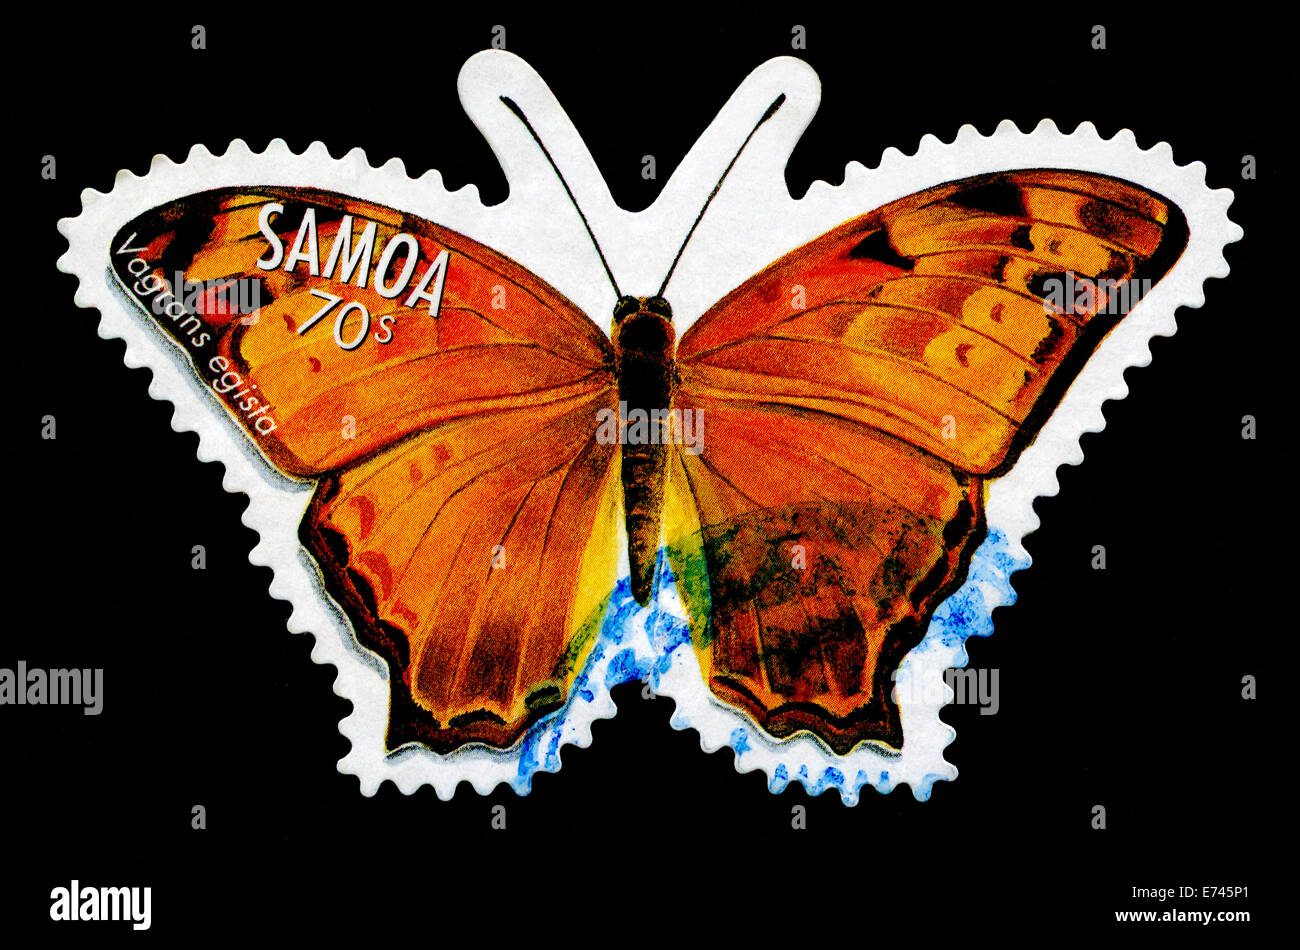 Samoa stamp depicting Vagrans Egista butterfly Stock Photo